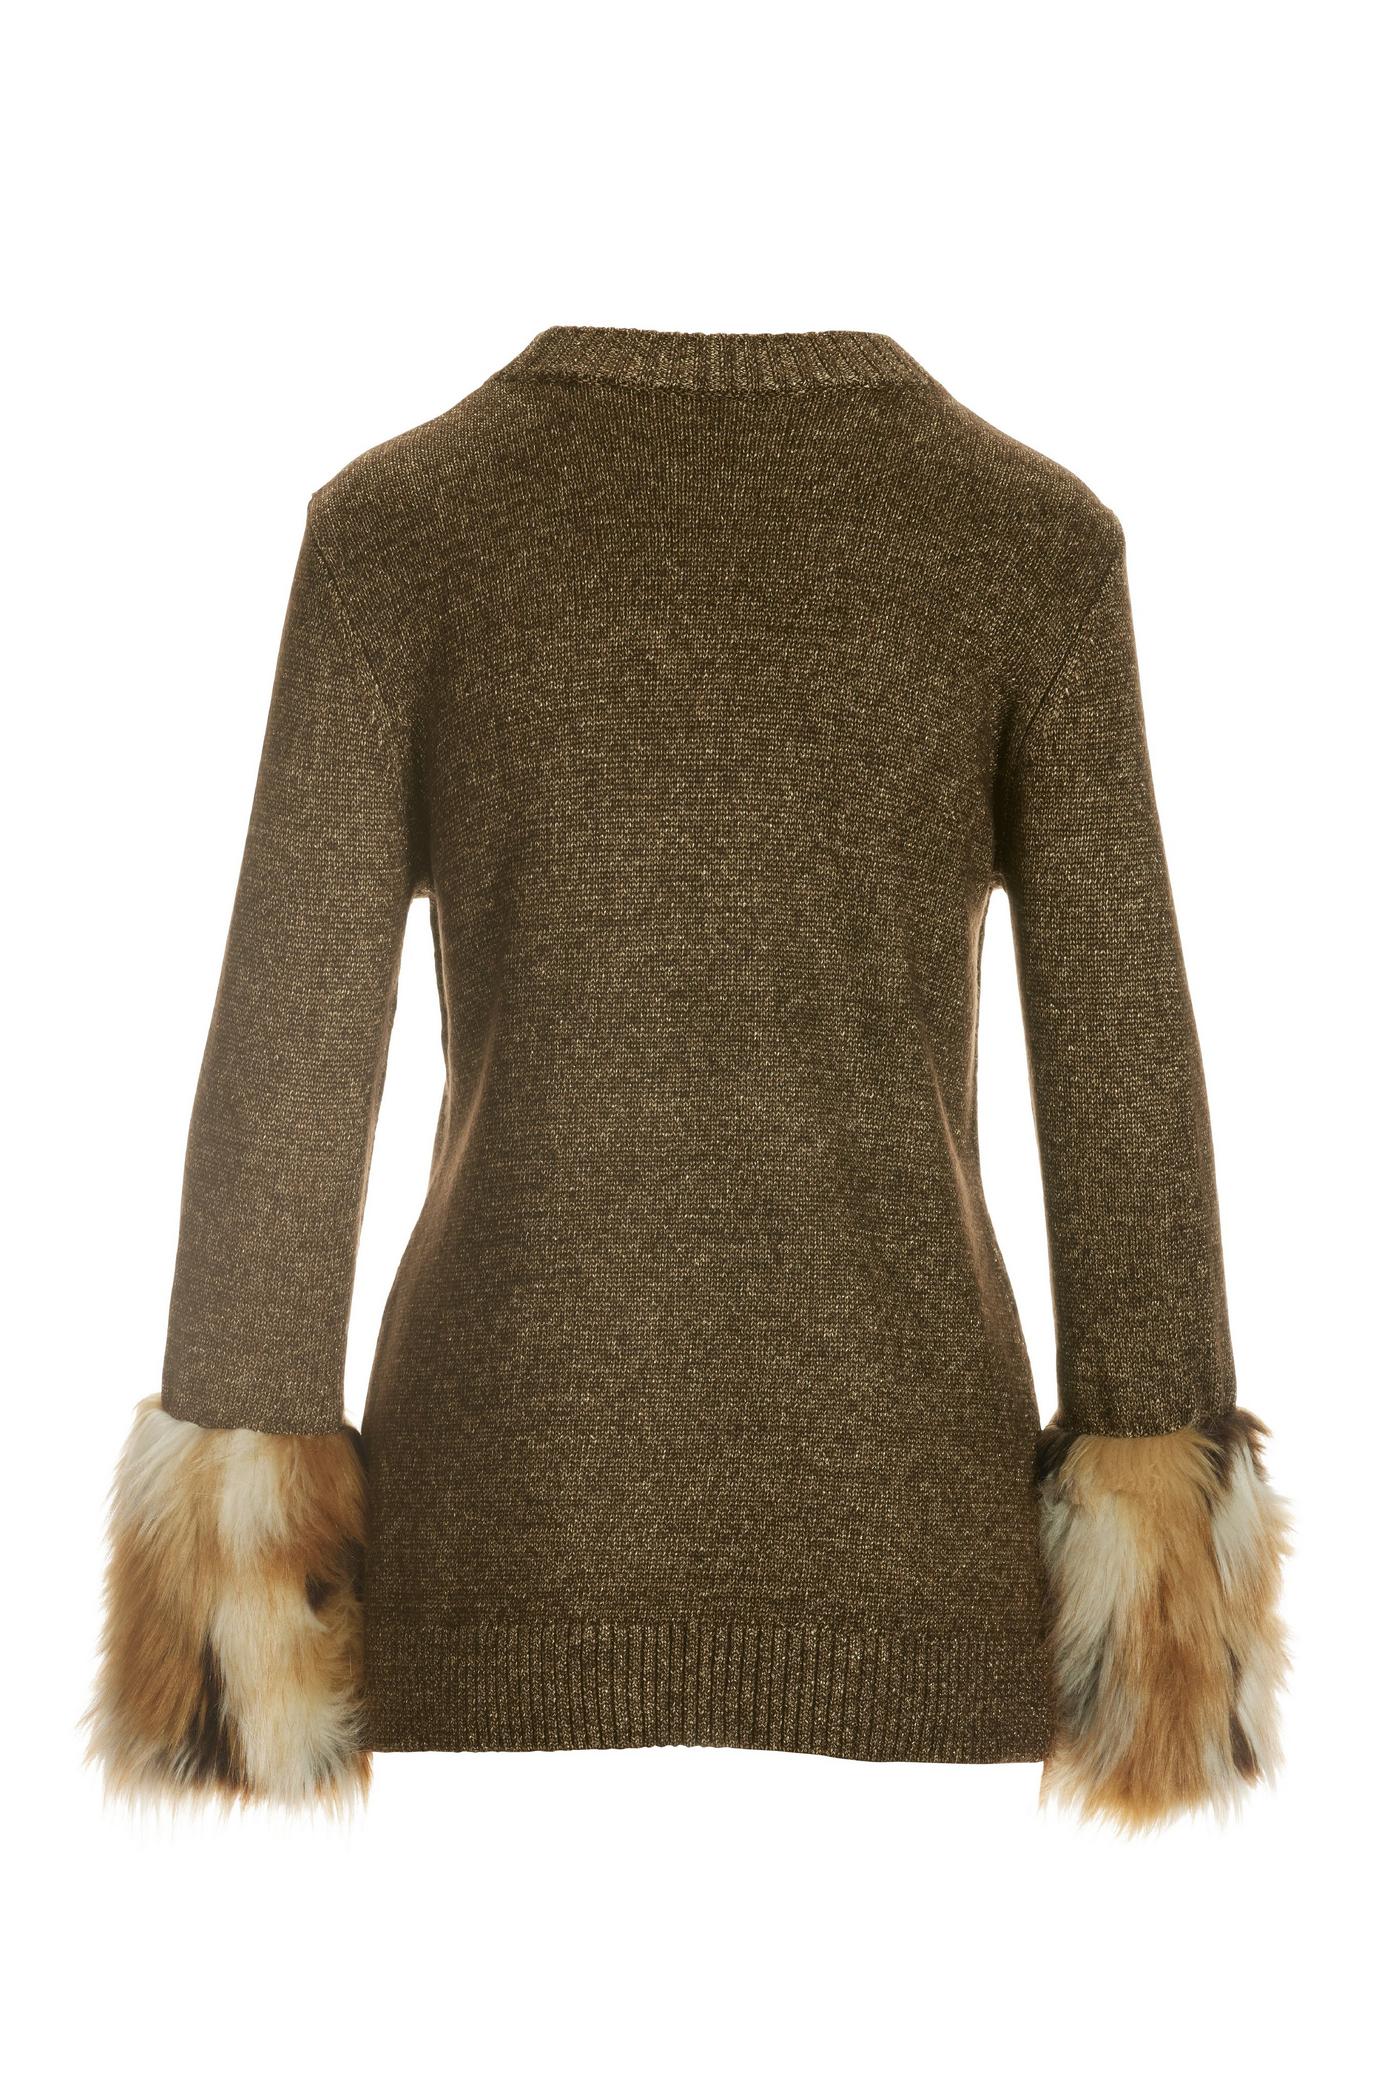 Fur Cuff Sweaters: Celebrity Fur Cuff Trend - Sydne Style